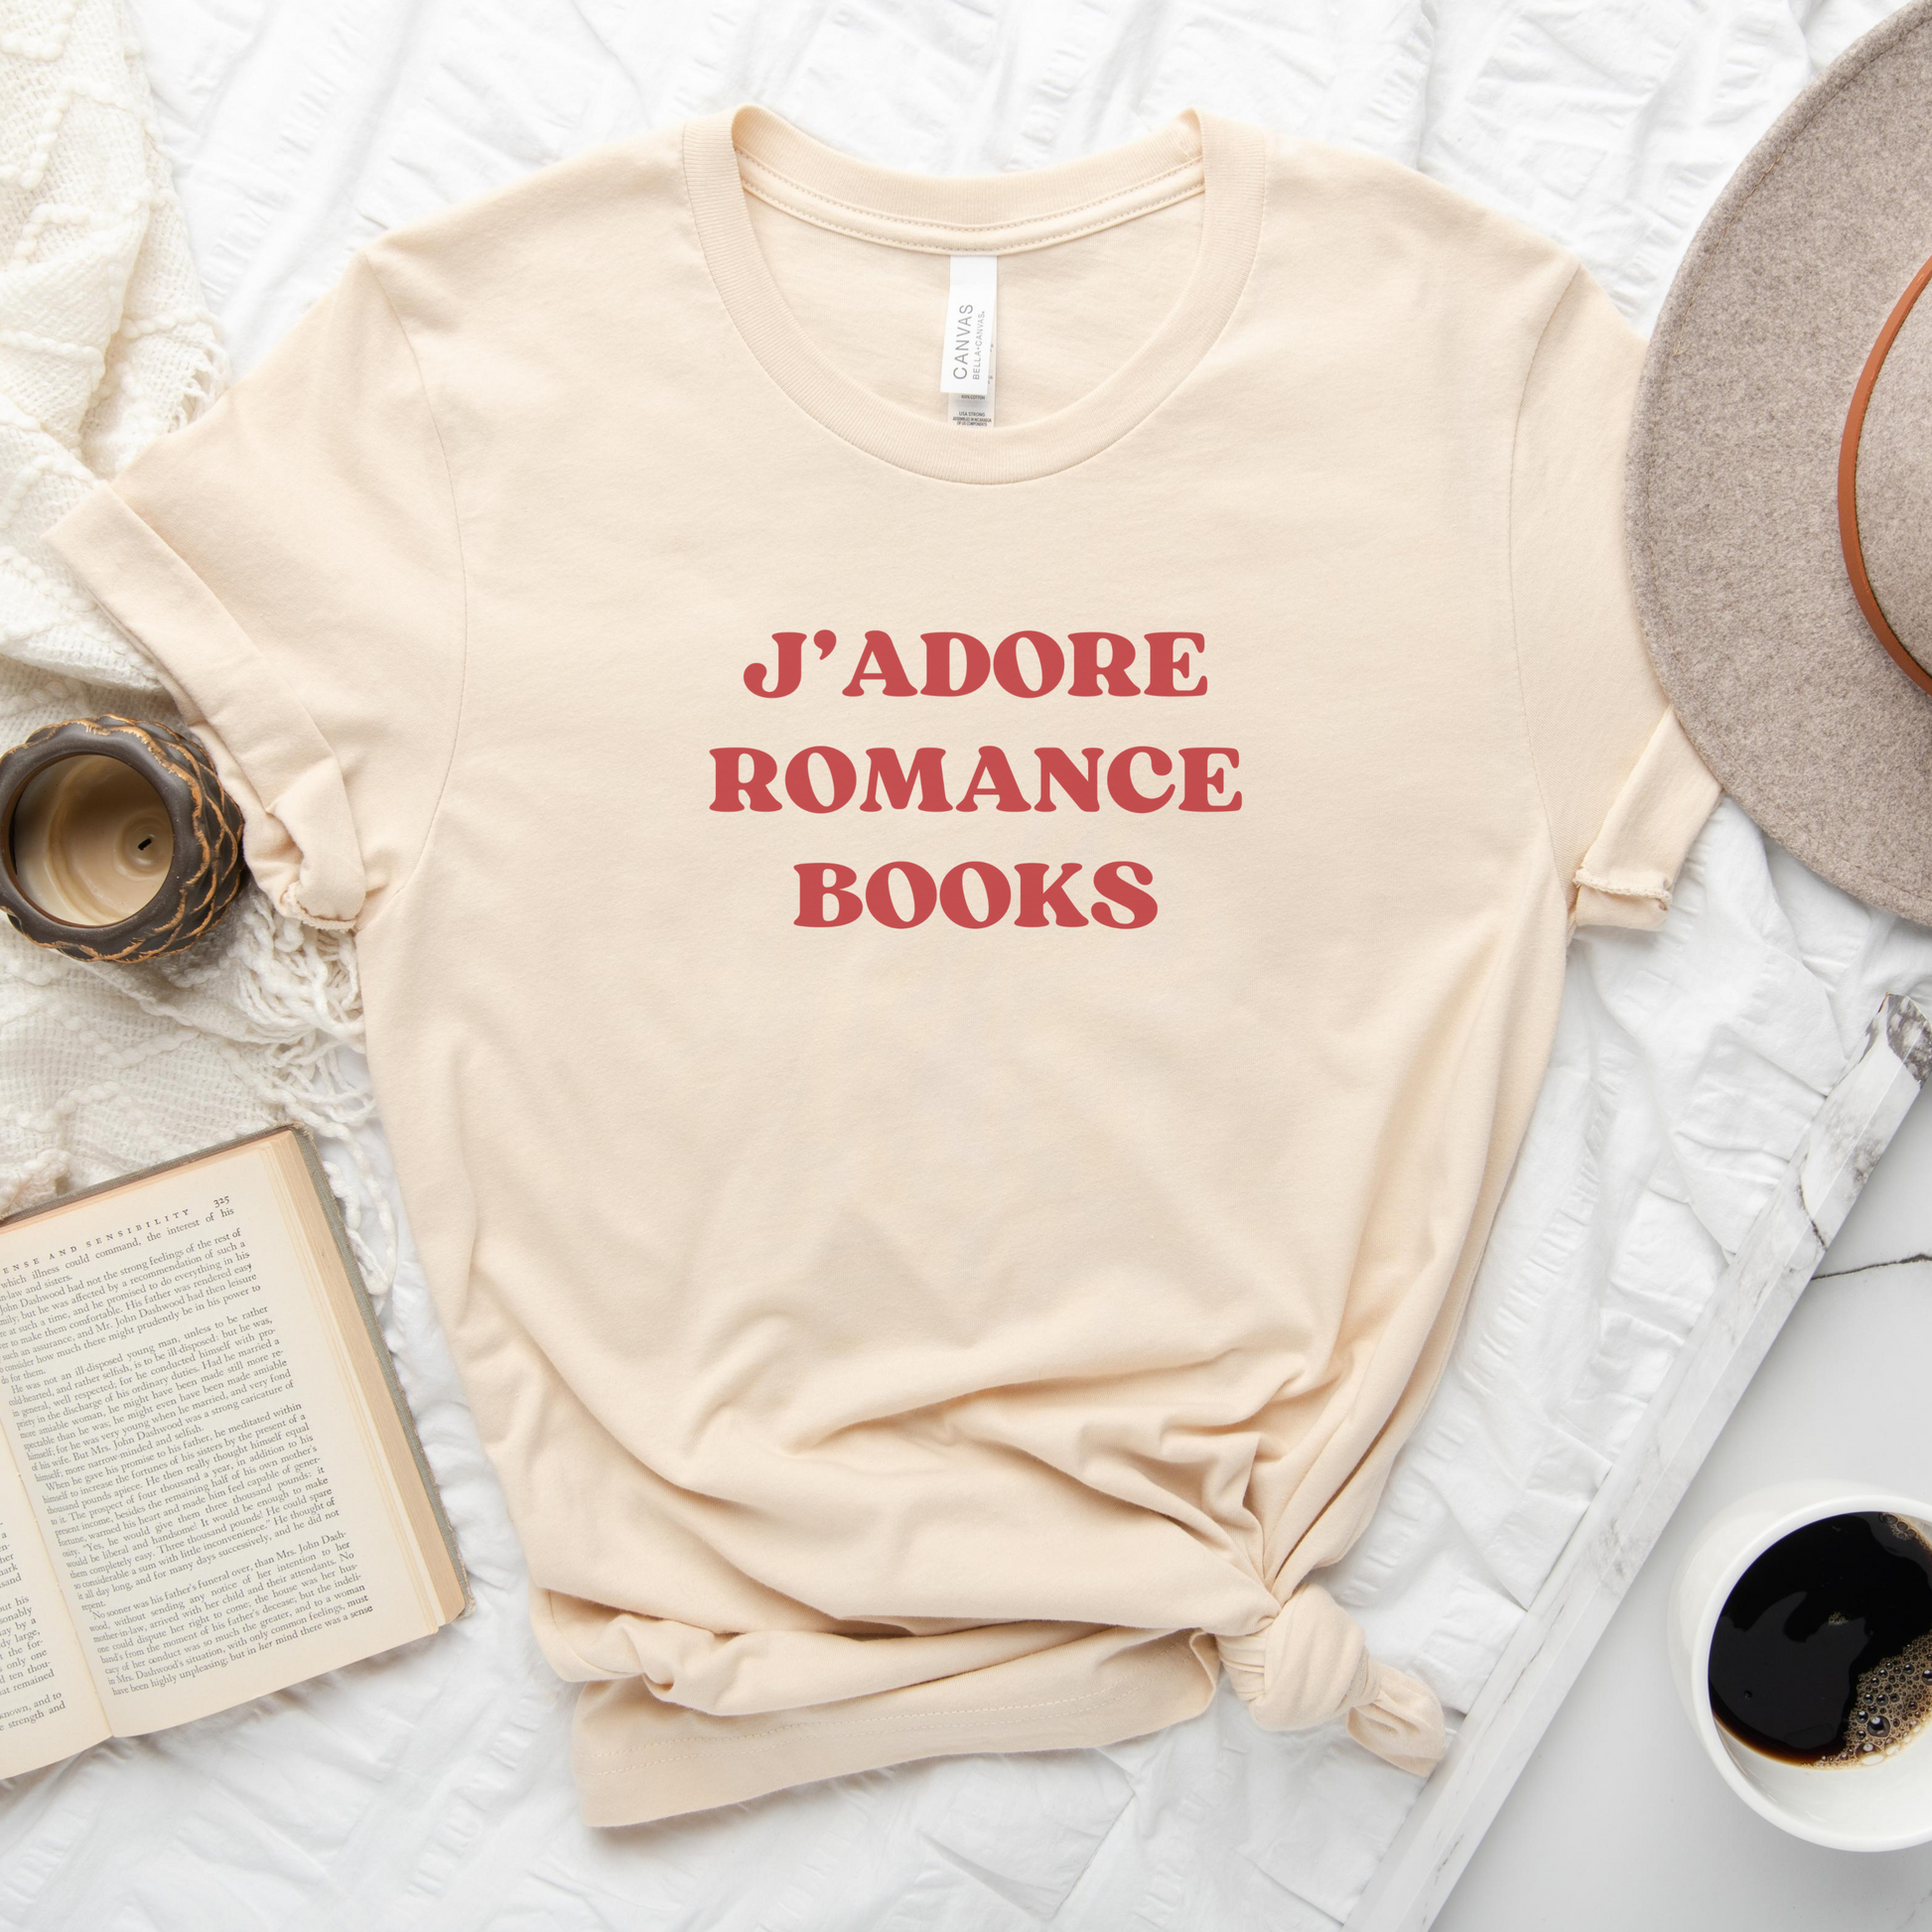 J’adore Love Romance Books Tee Shirt